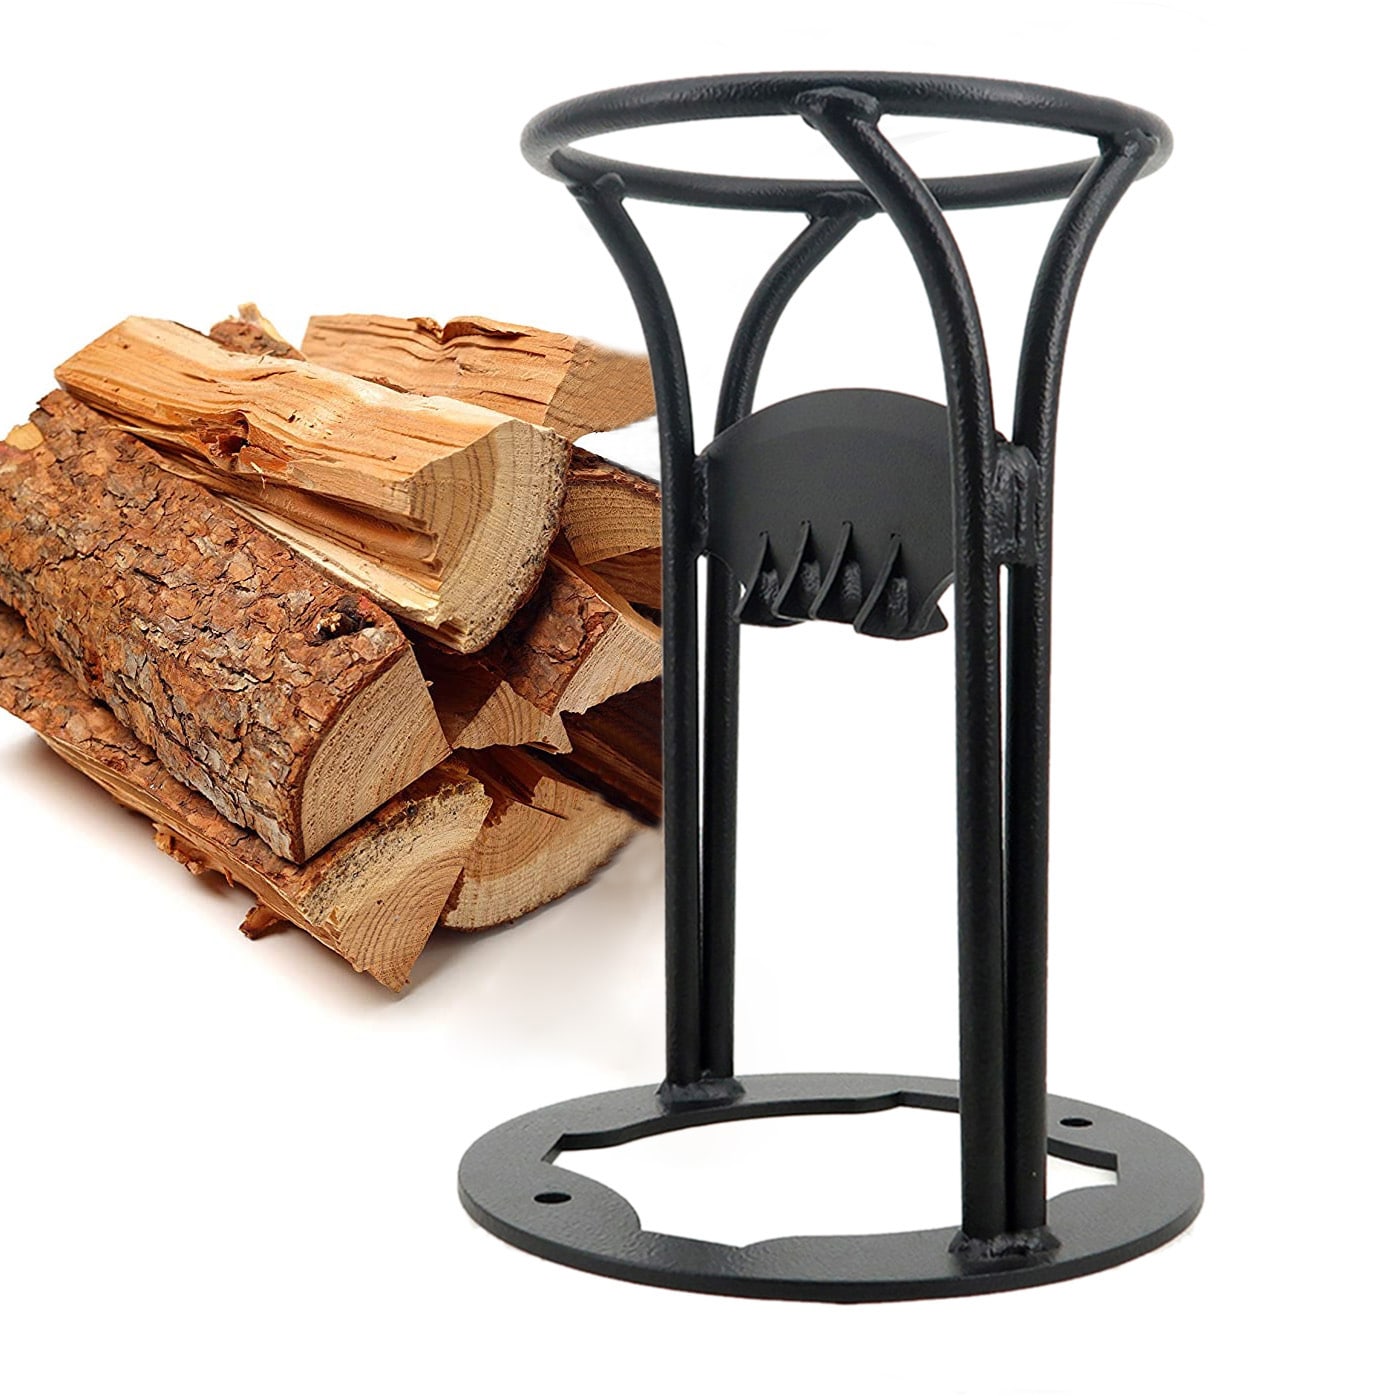 Steel Firewood Splitter, Kindling Wood Cracker Cutting Tool for